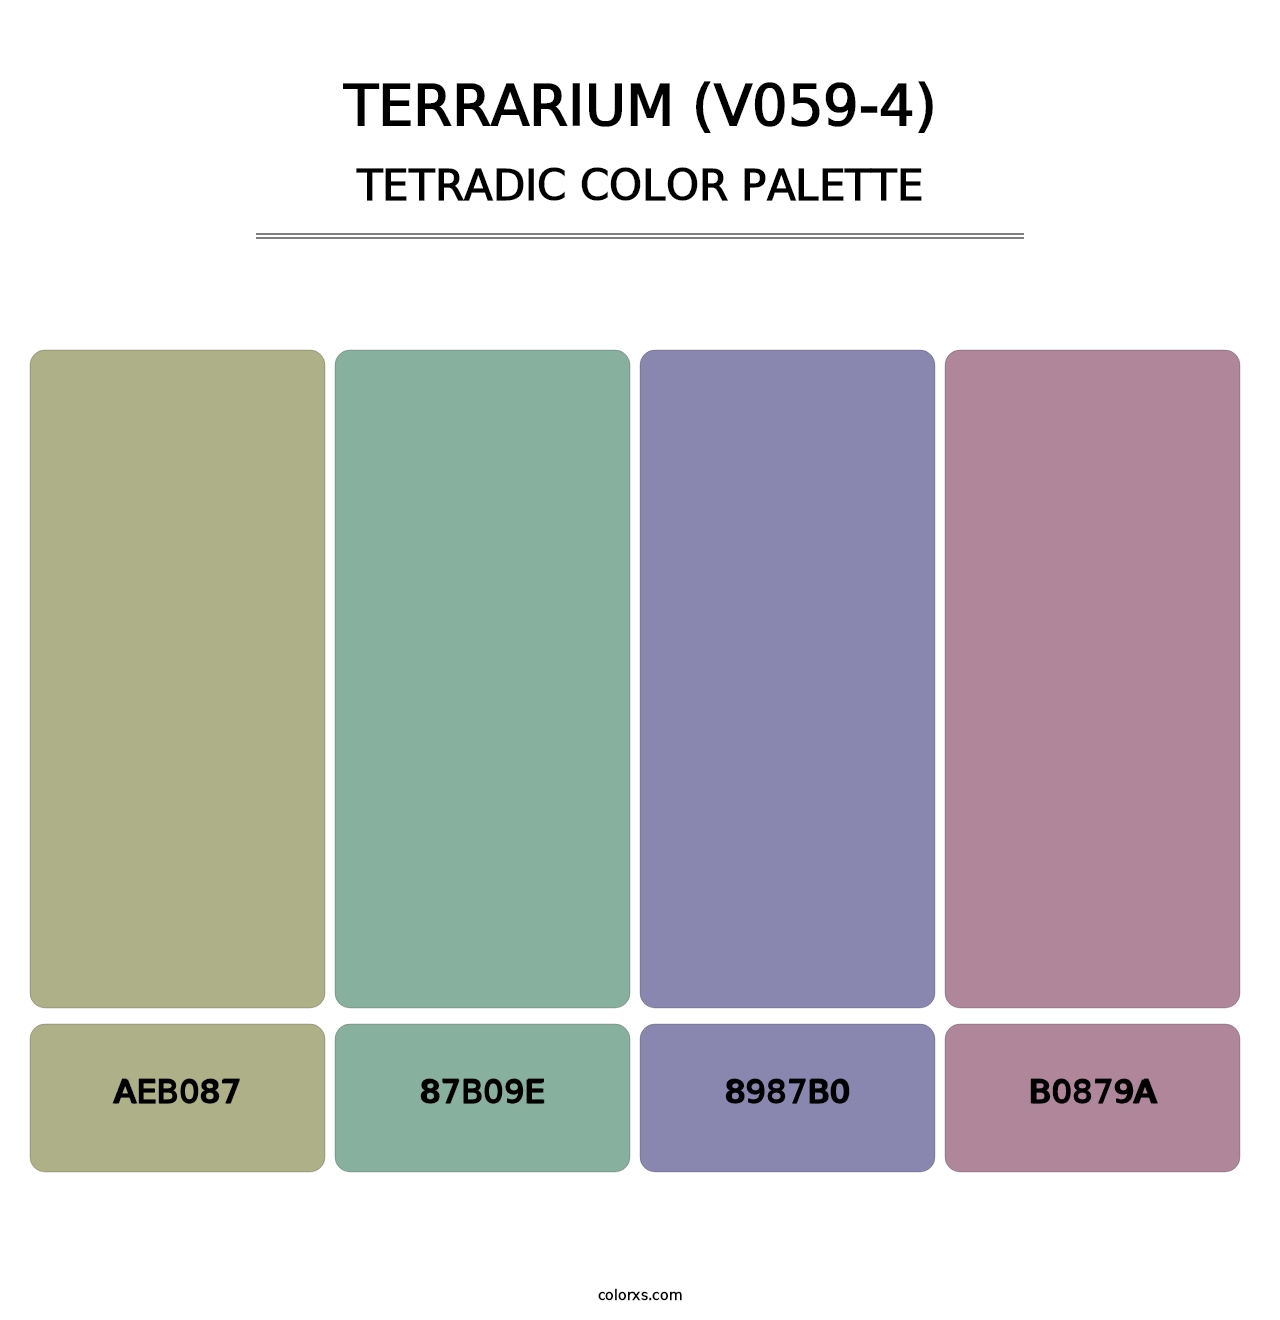 Terrarium (V059-4) - Tetradic Color Palette